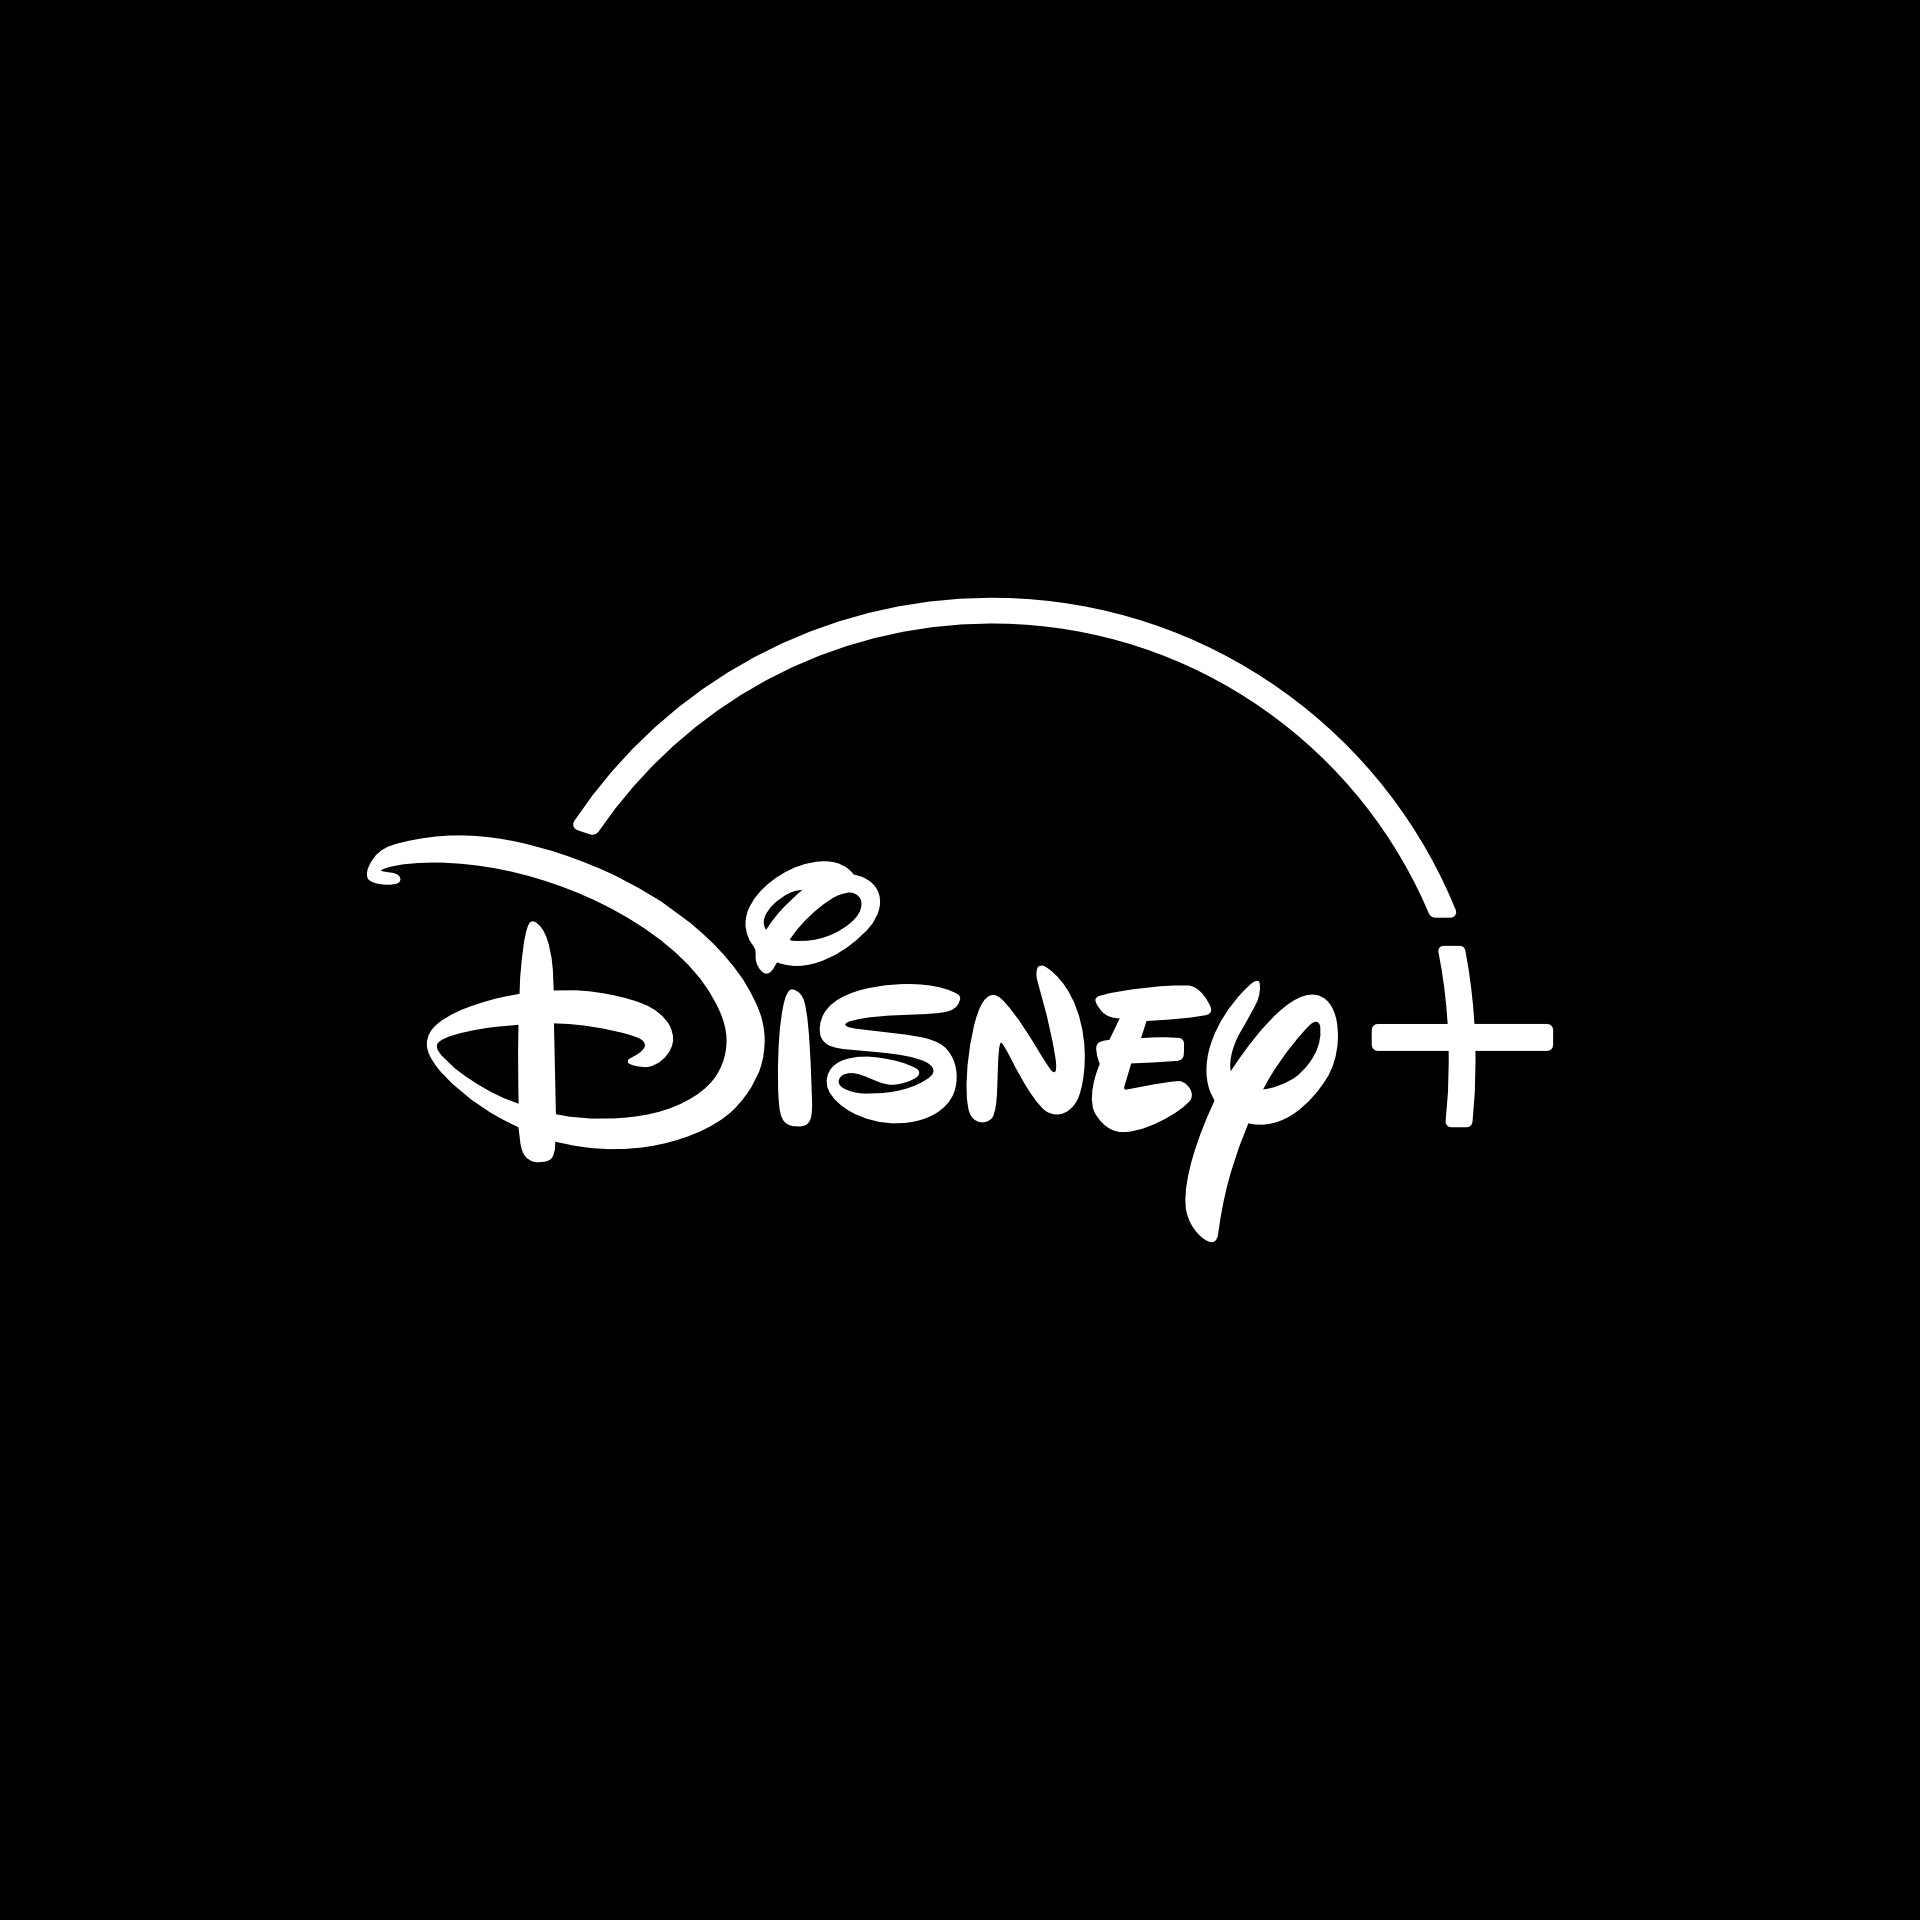 Daniel-Nolan-Music_DisneyPlus-Logo_1920px-bs.png